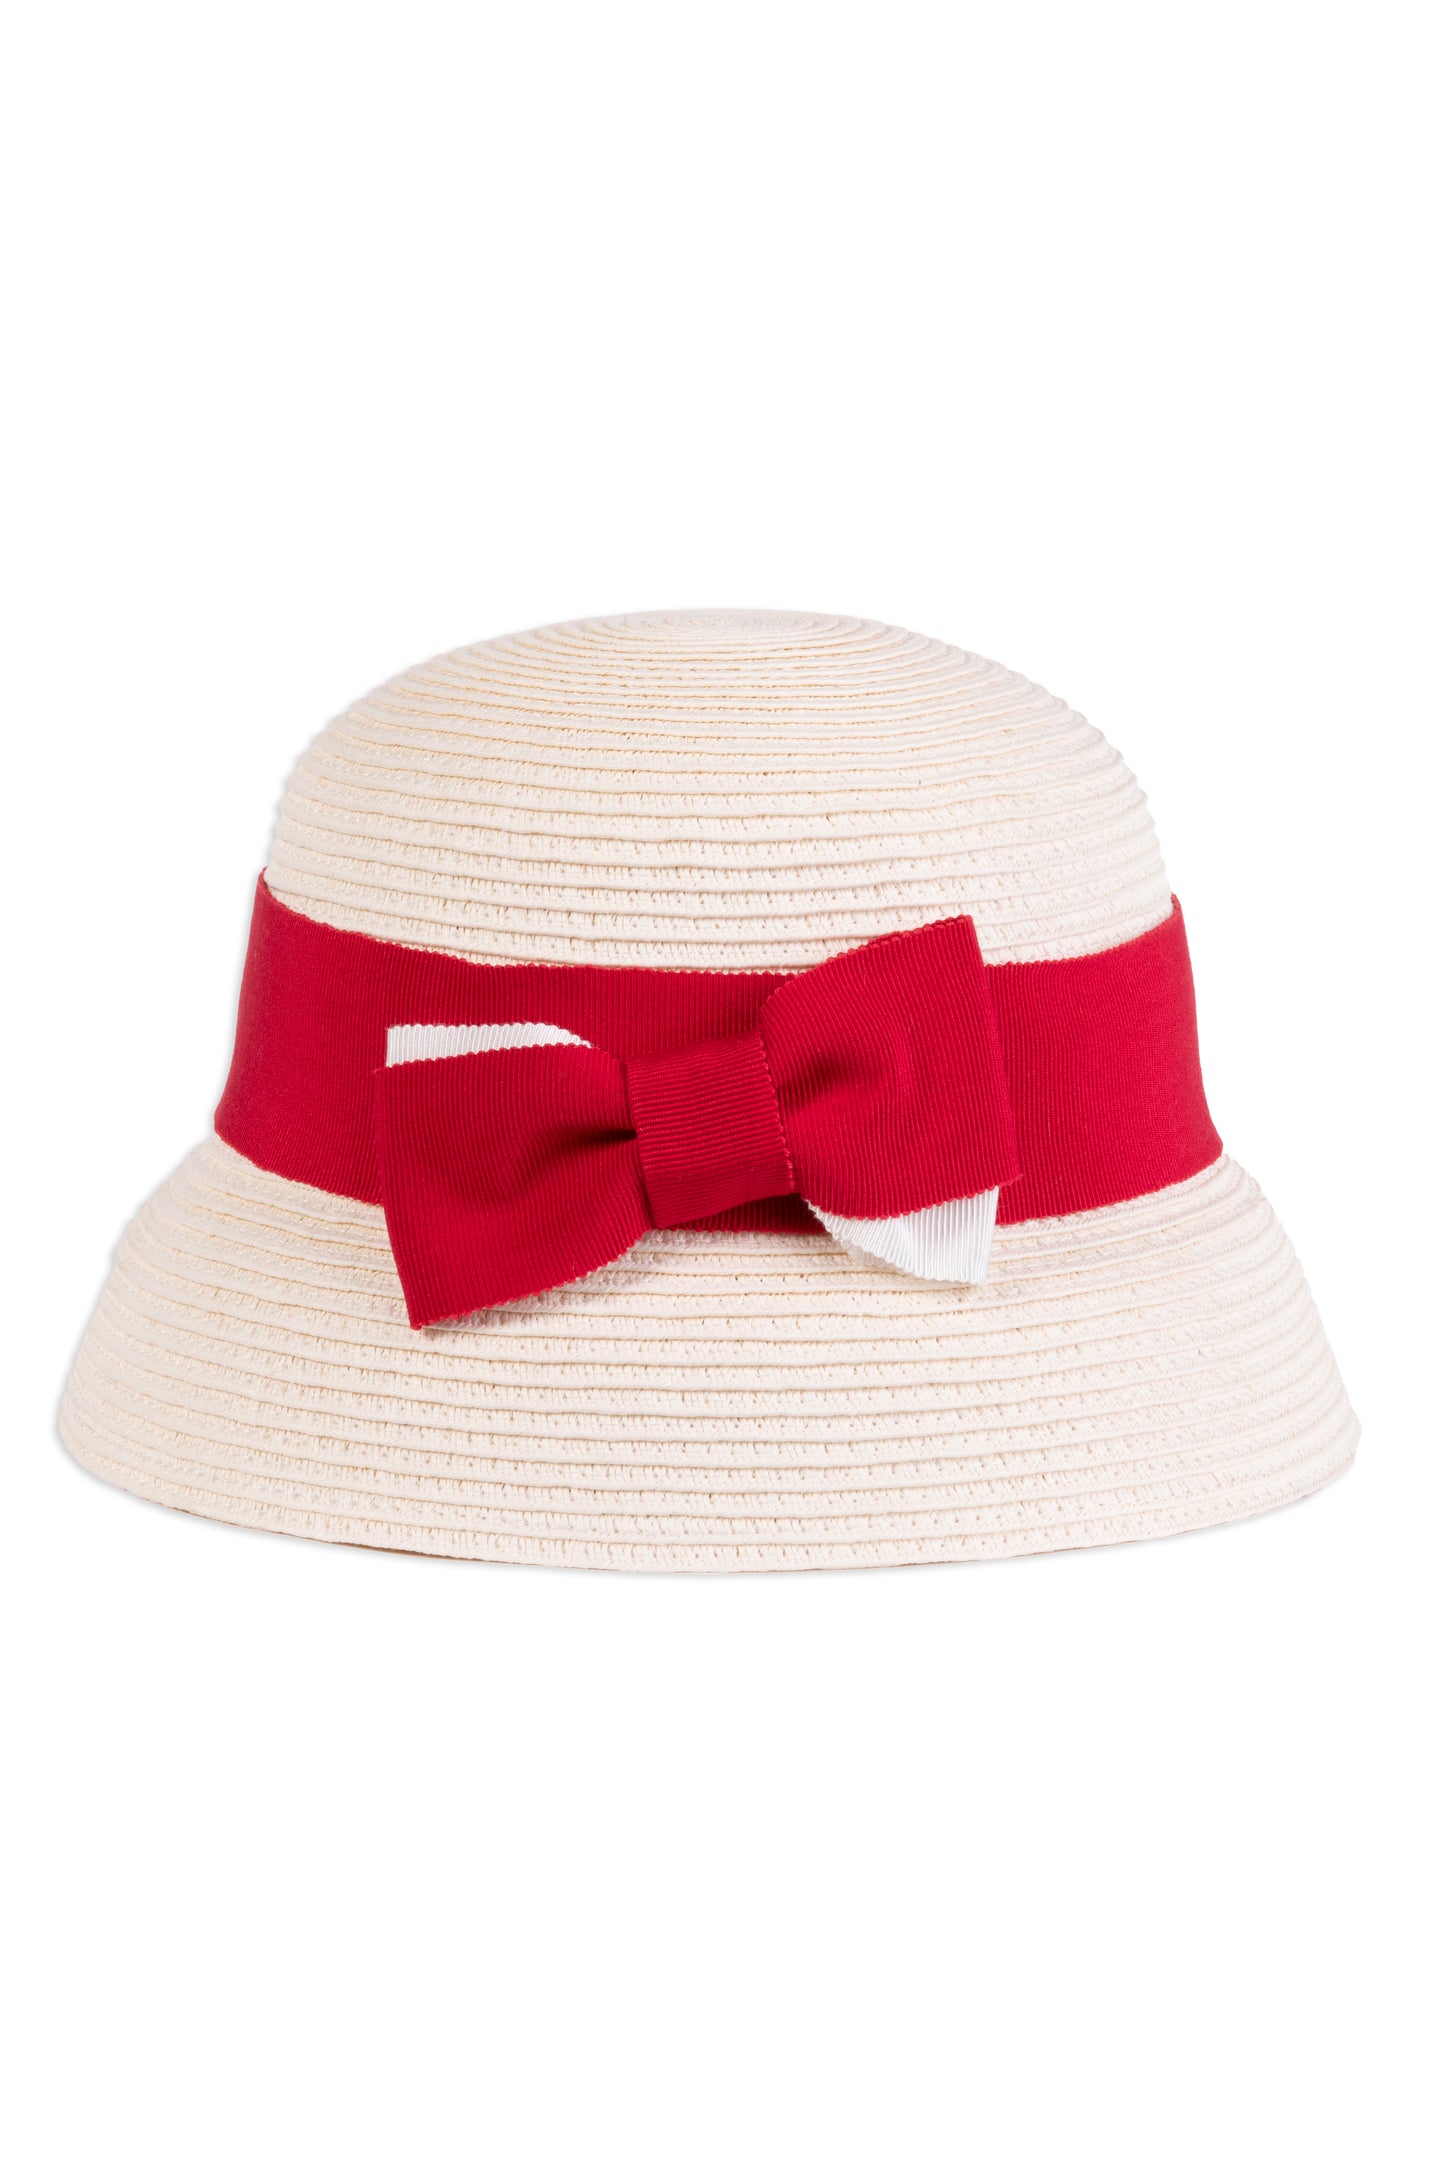 Bow-embellished straw bowler hat